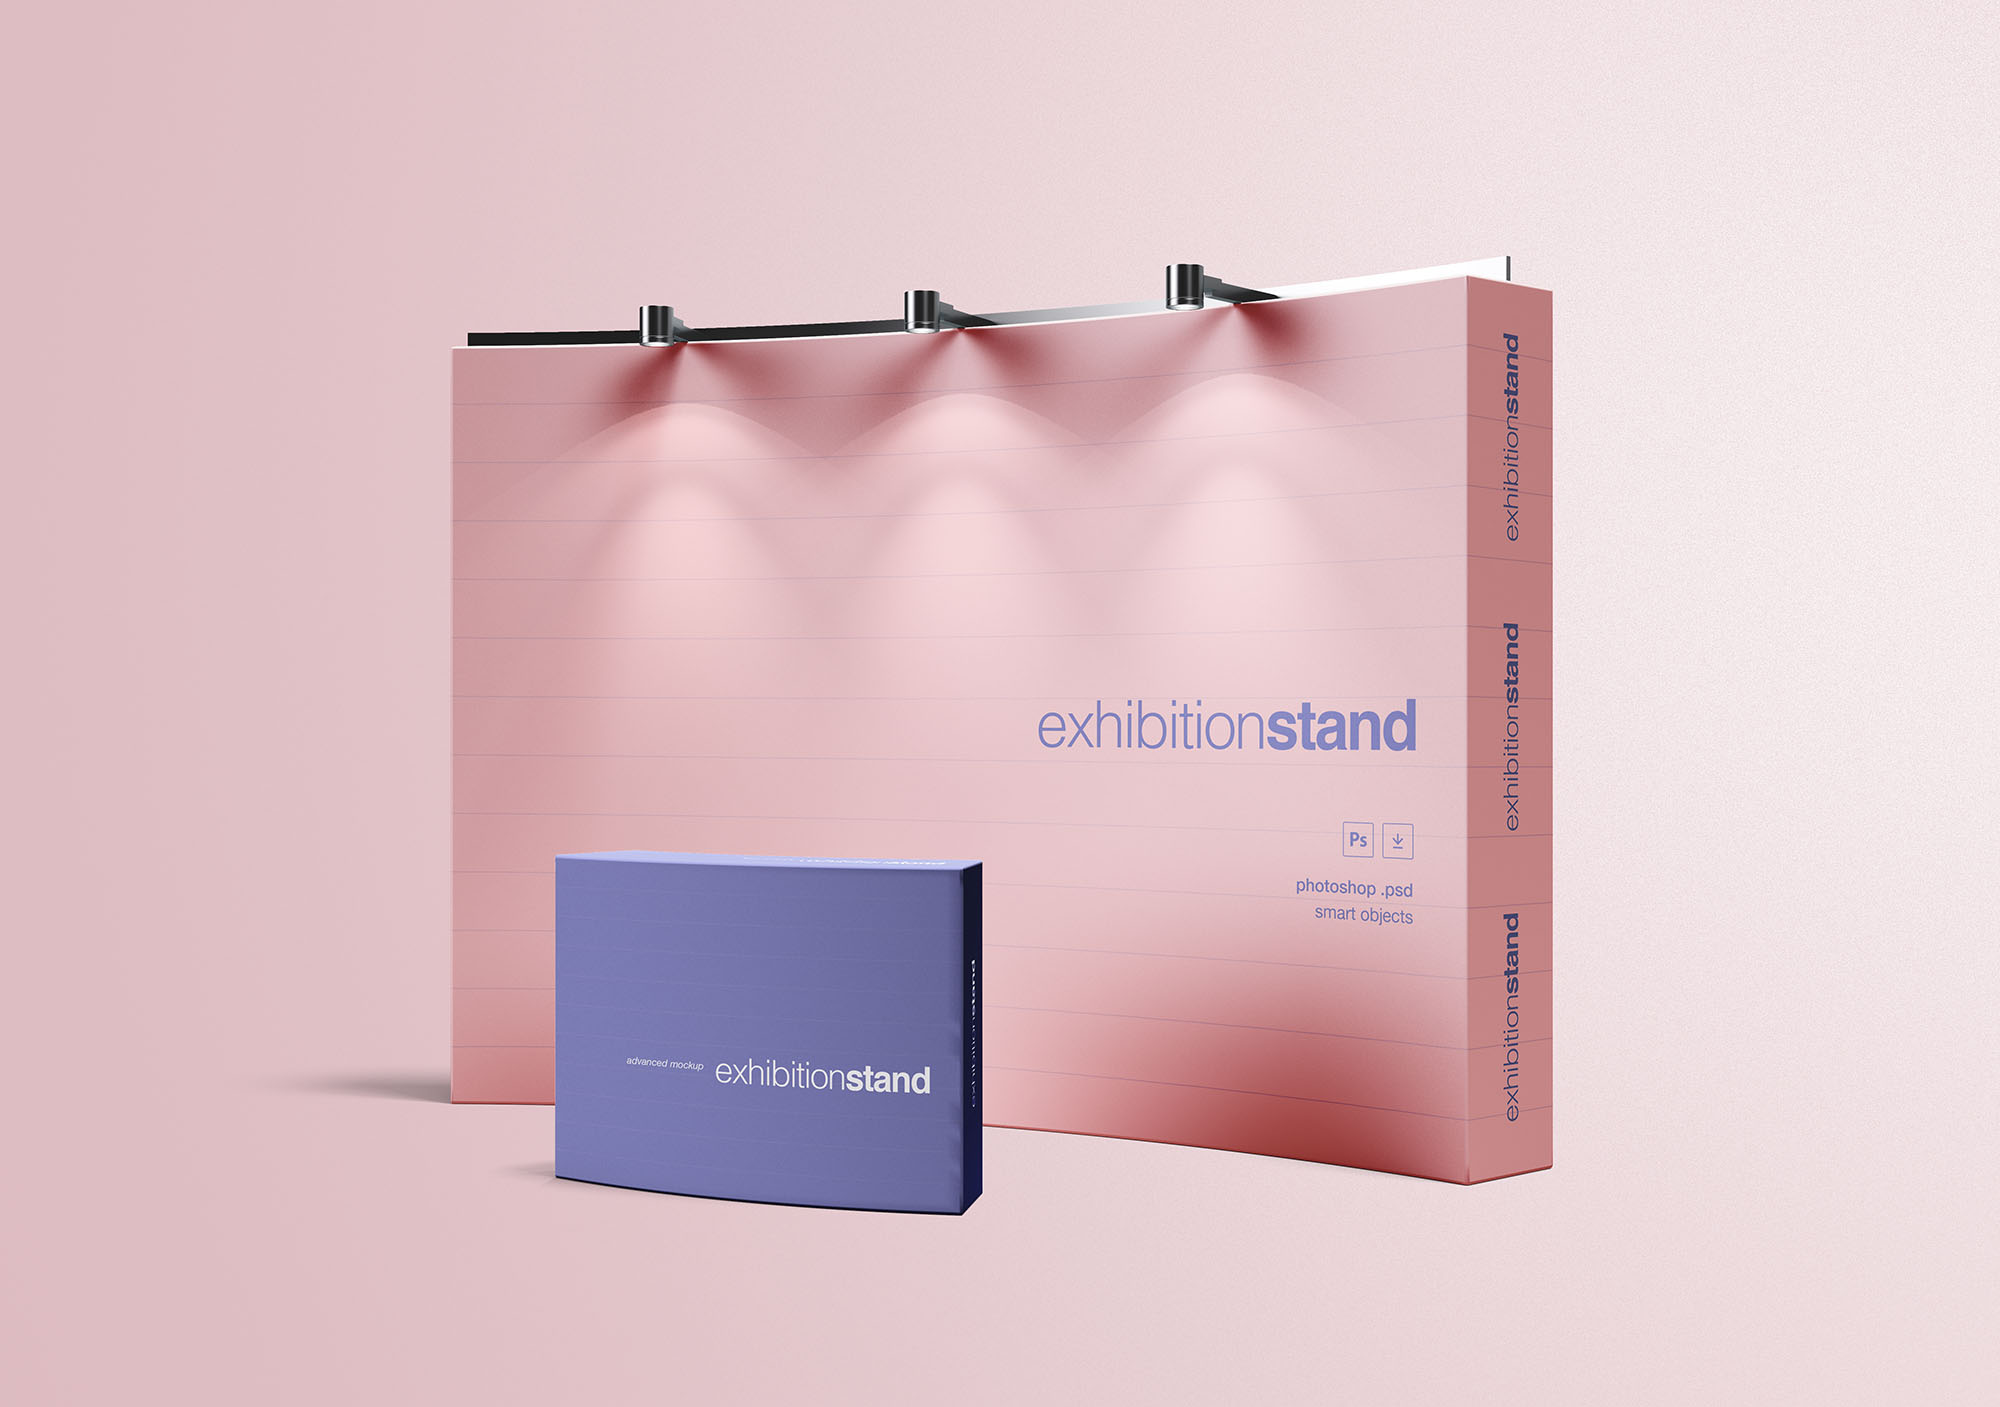 简易品牌展台设计效果图样机模板 Simple Exhibition Stand Mockup插图